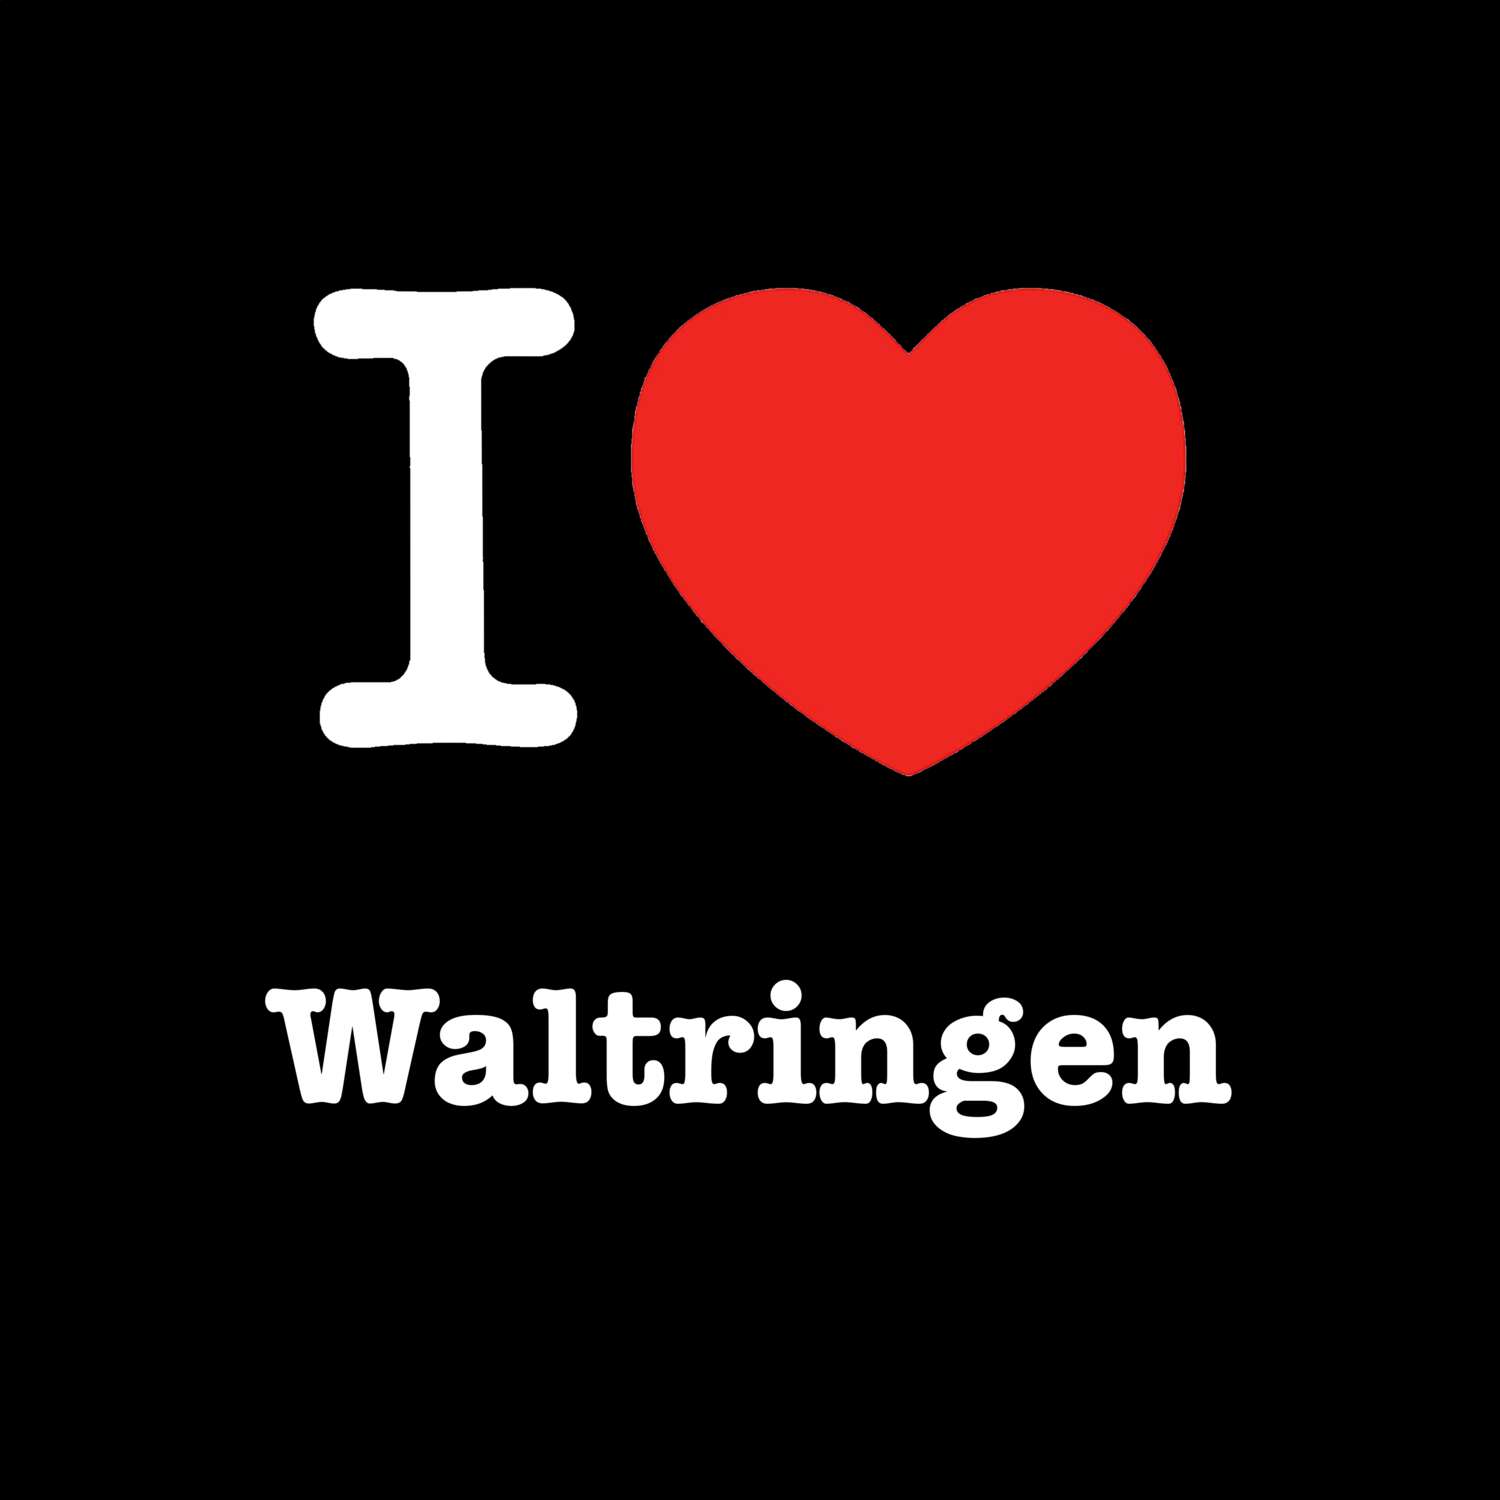 Waltringen T-Shirt »I love«